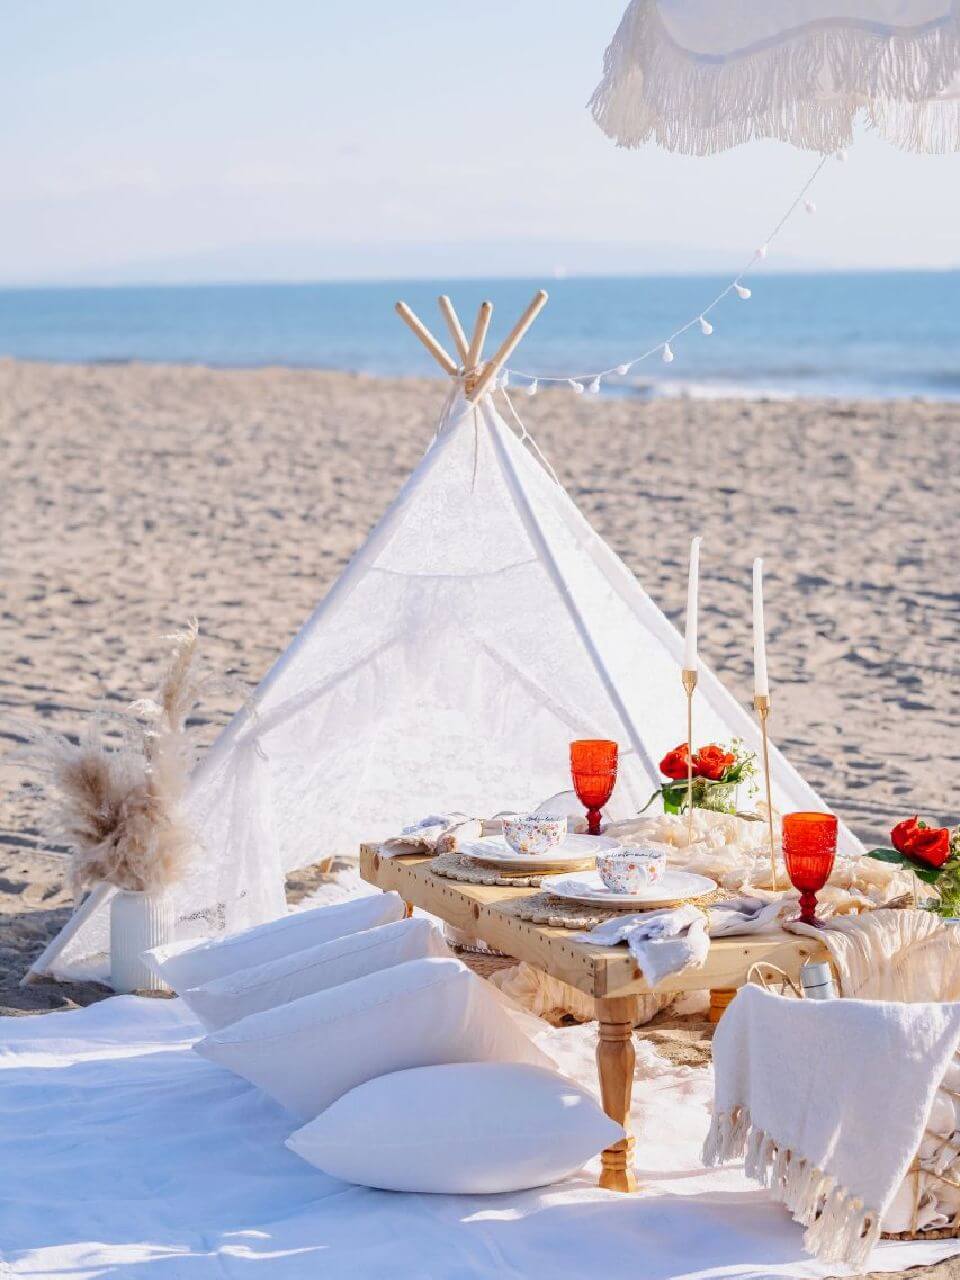 beautiful picnic pop-up setup at the beach 